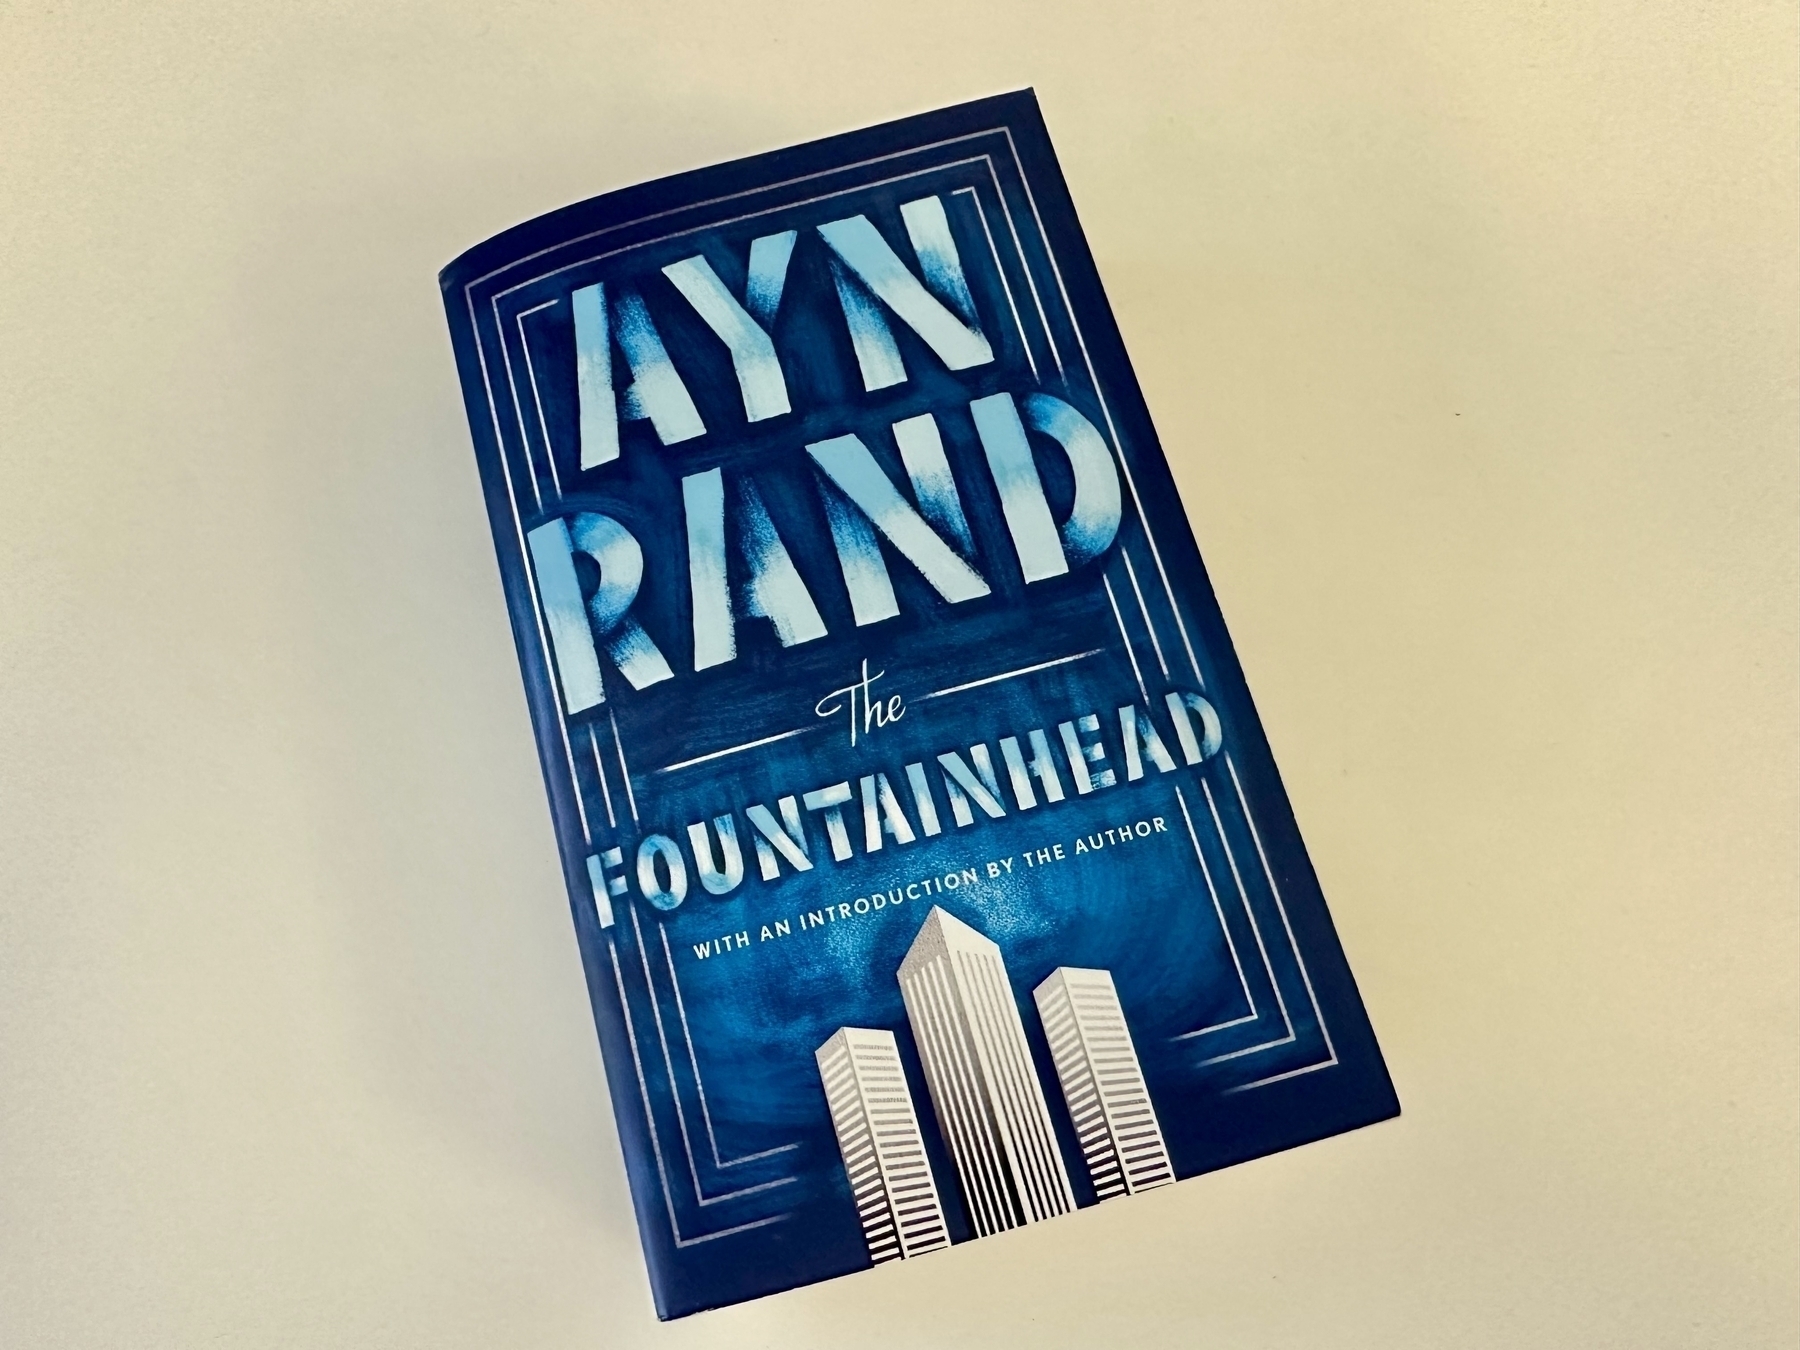 A copy of Ayn Rand's novel 'The Fountainhead' is lying on a flat surface.